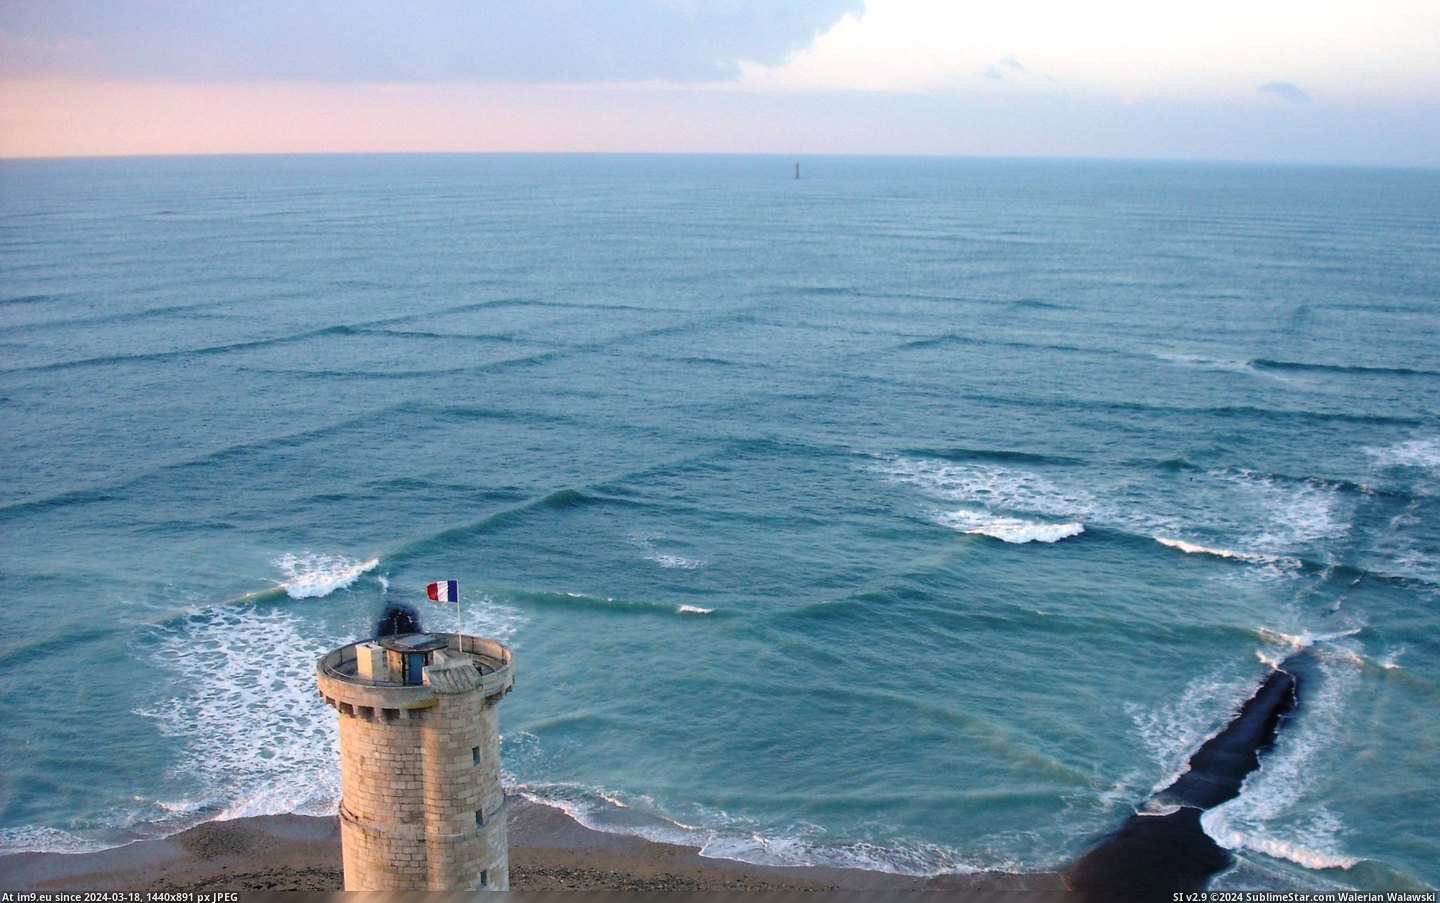 #French #Coastline #Grid #Waves [Pics] Grid waves on the French coastline Pic. (Изображение из альбом My r/PICS favs))